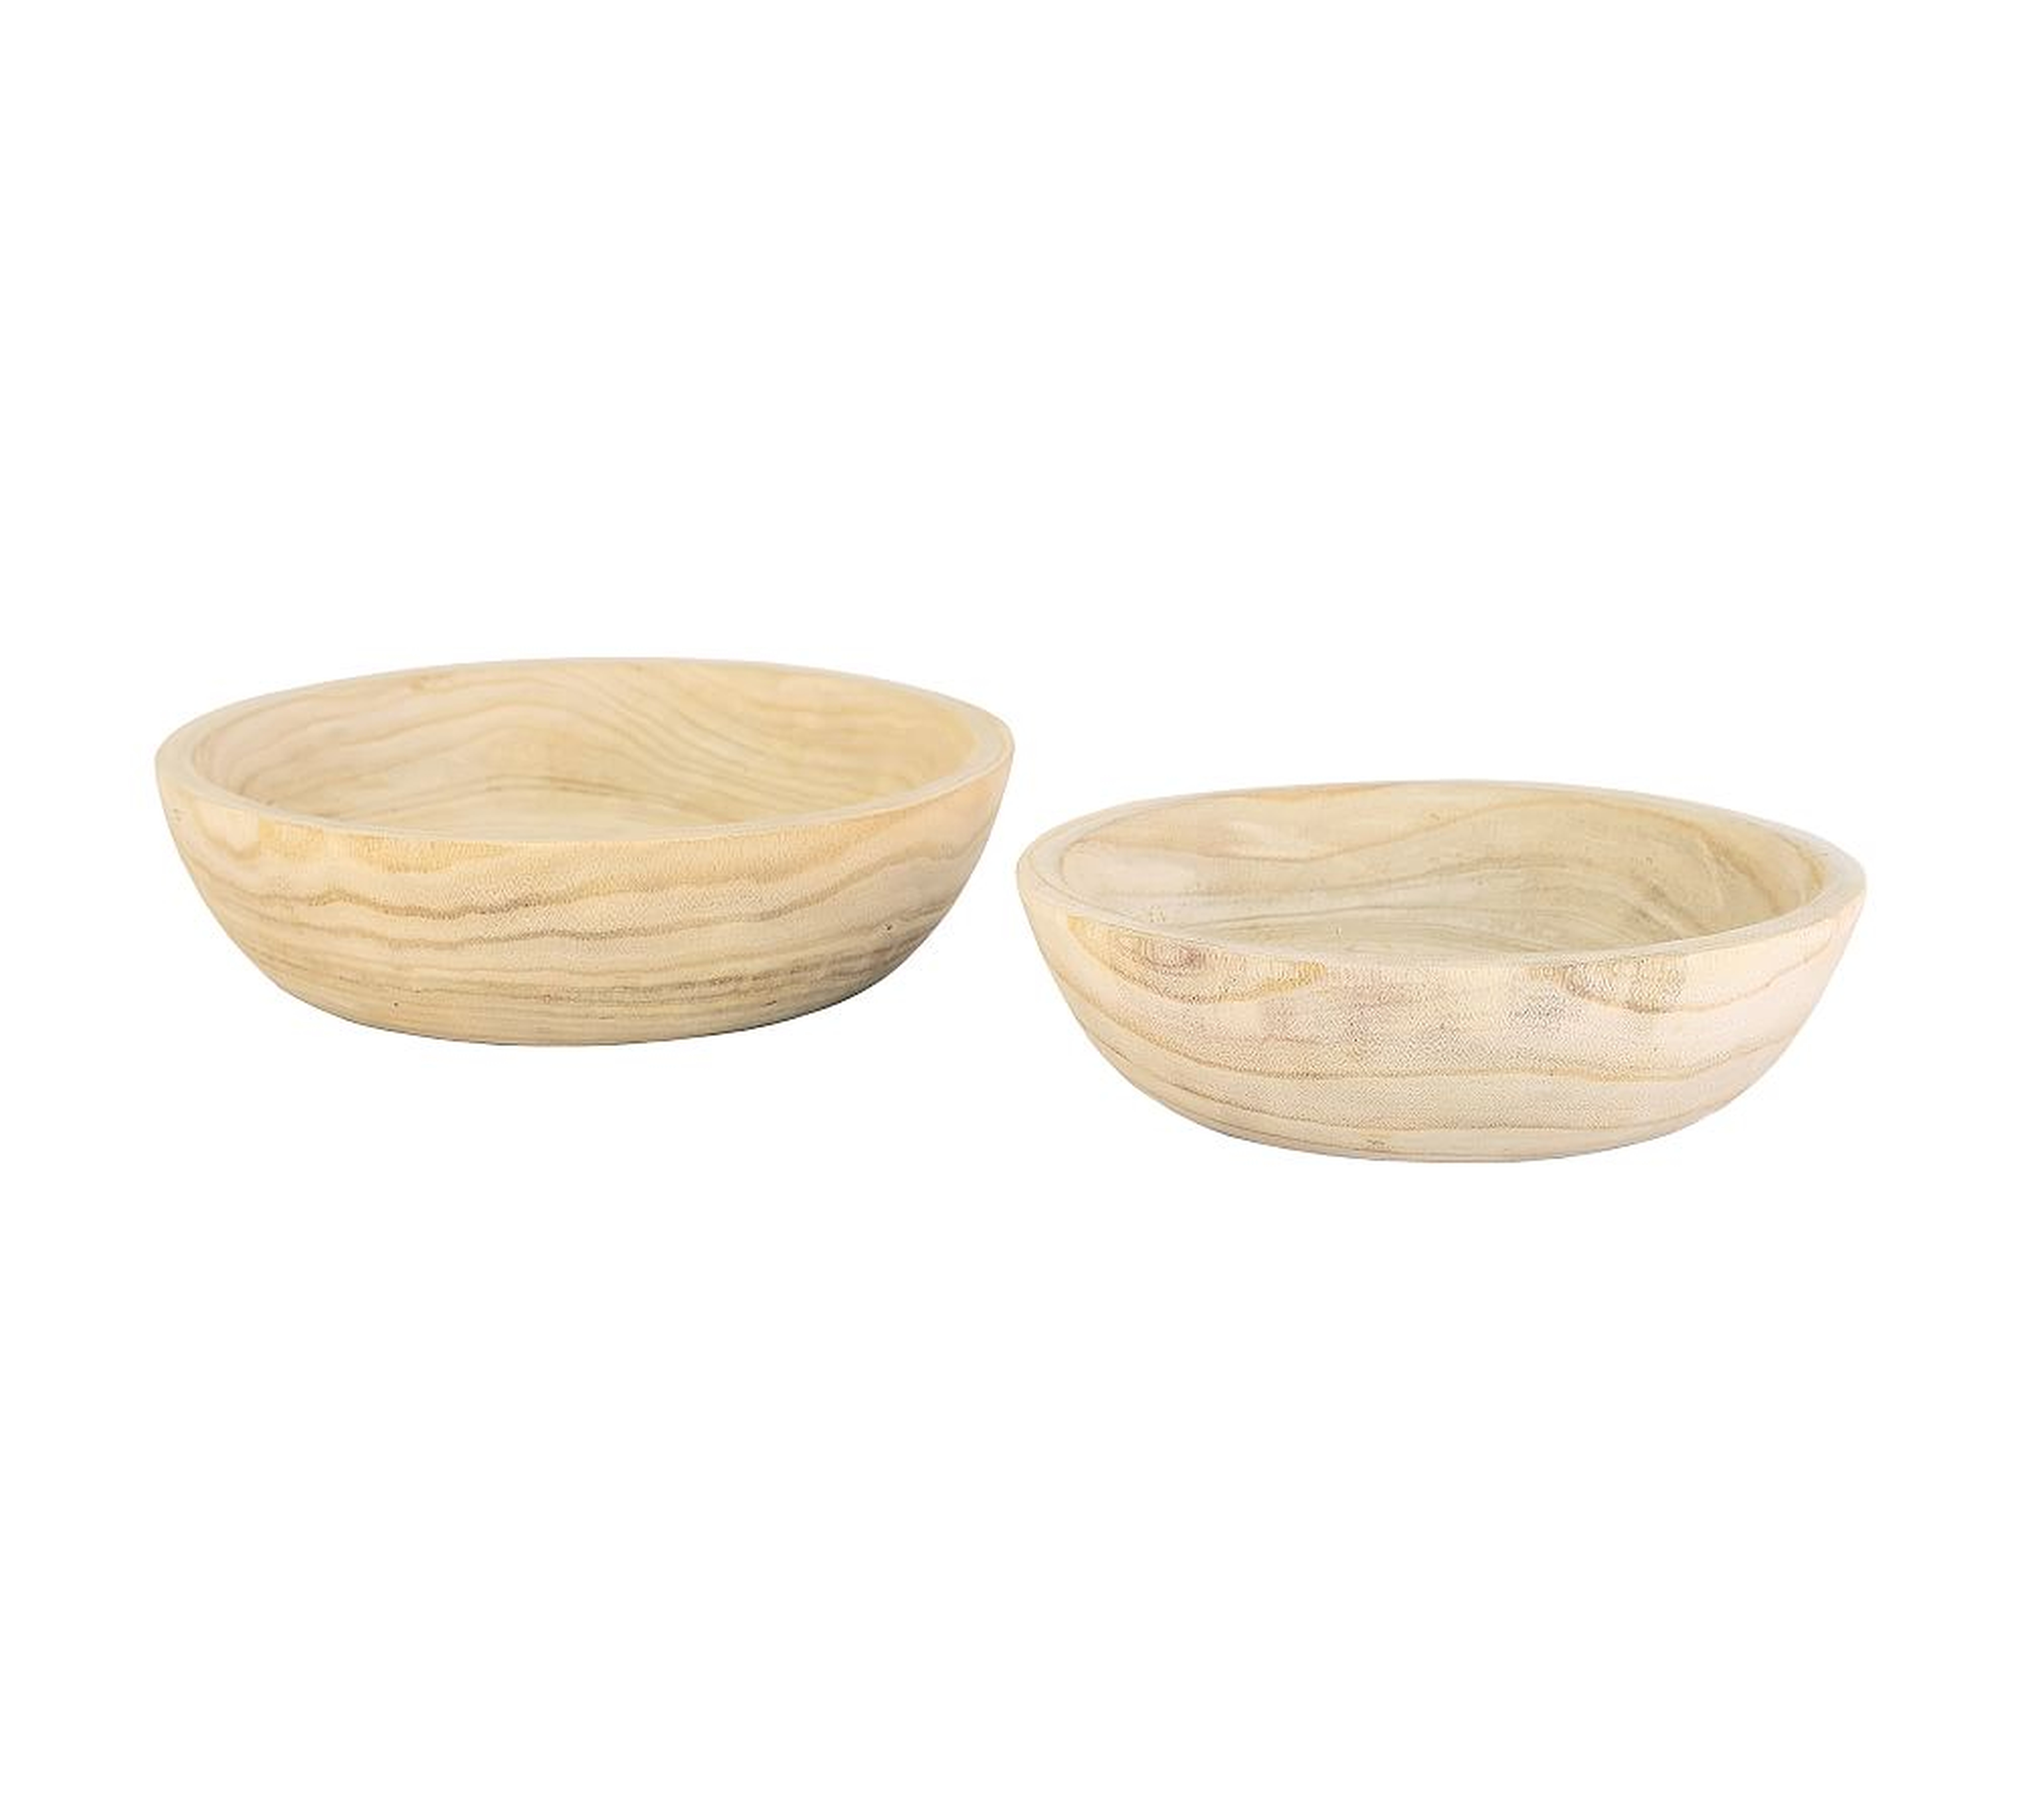 Paulownia Wood Carved, Bowls, Set of 2 - Pottery Barn